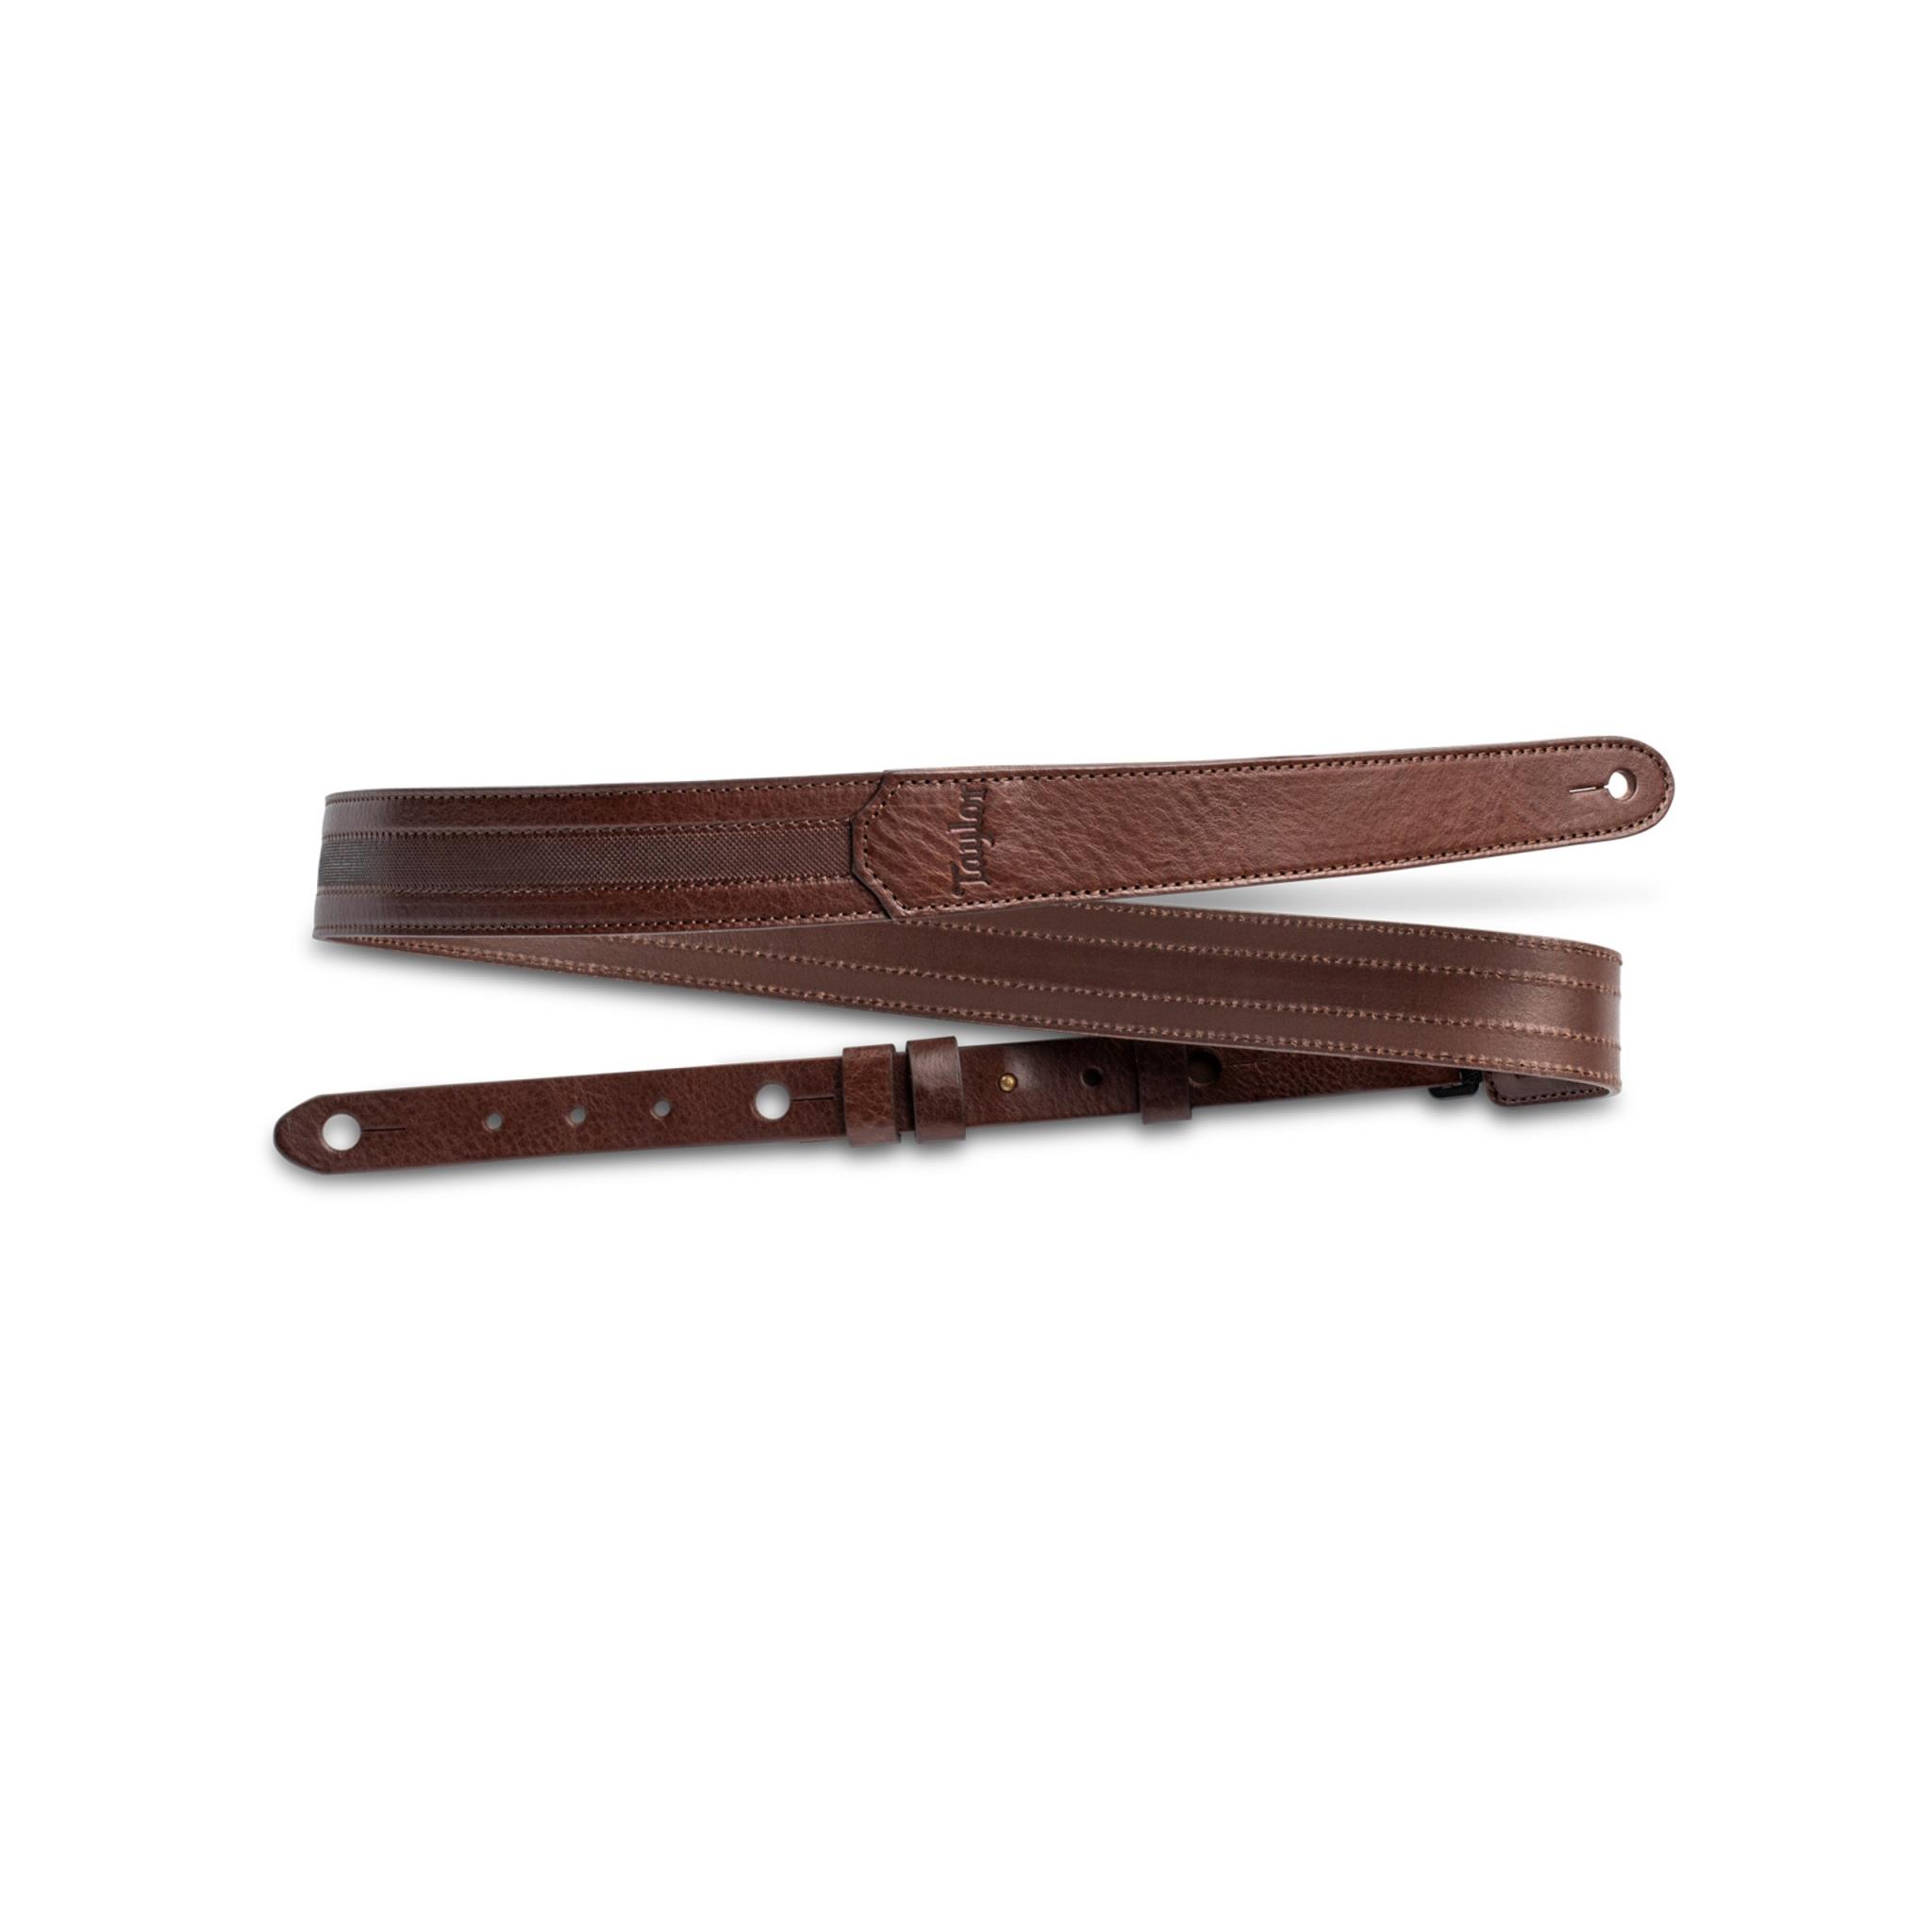 Taylor Slim Leather Strap, Chocolate Brown w/
Engraving,1.50",Emobossed Logo